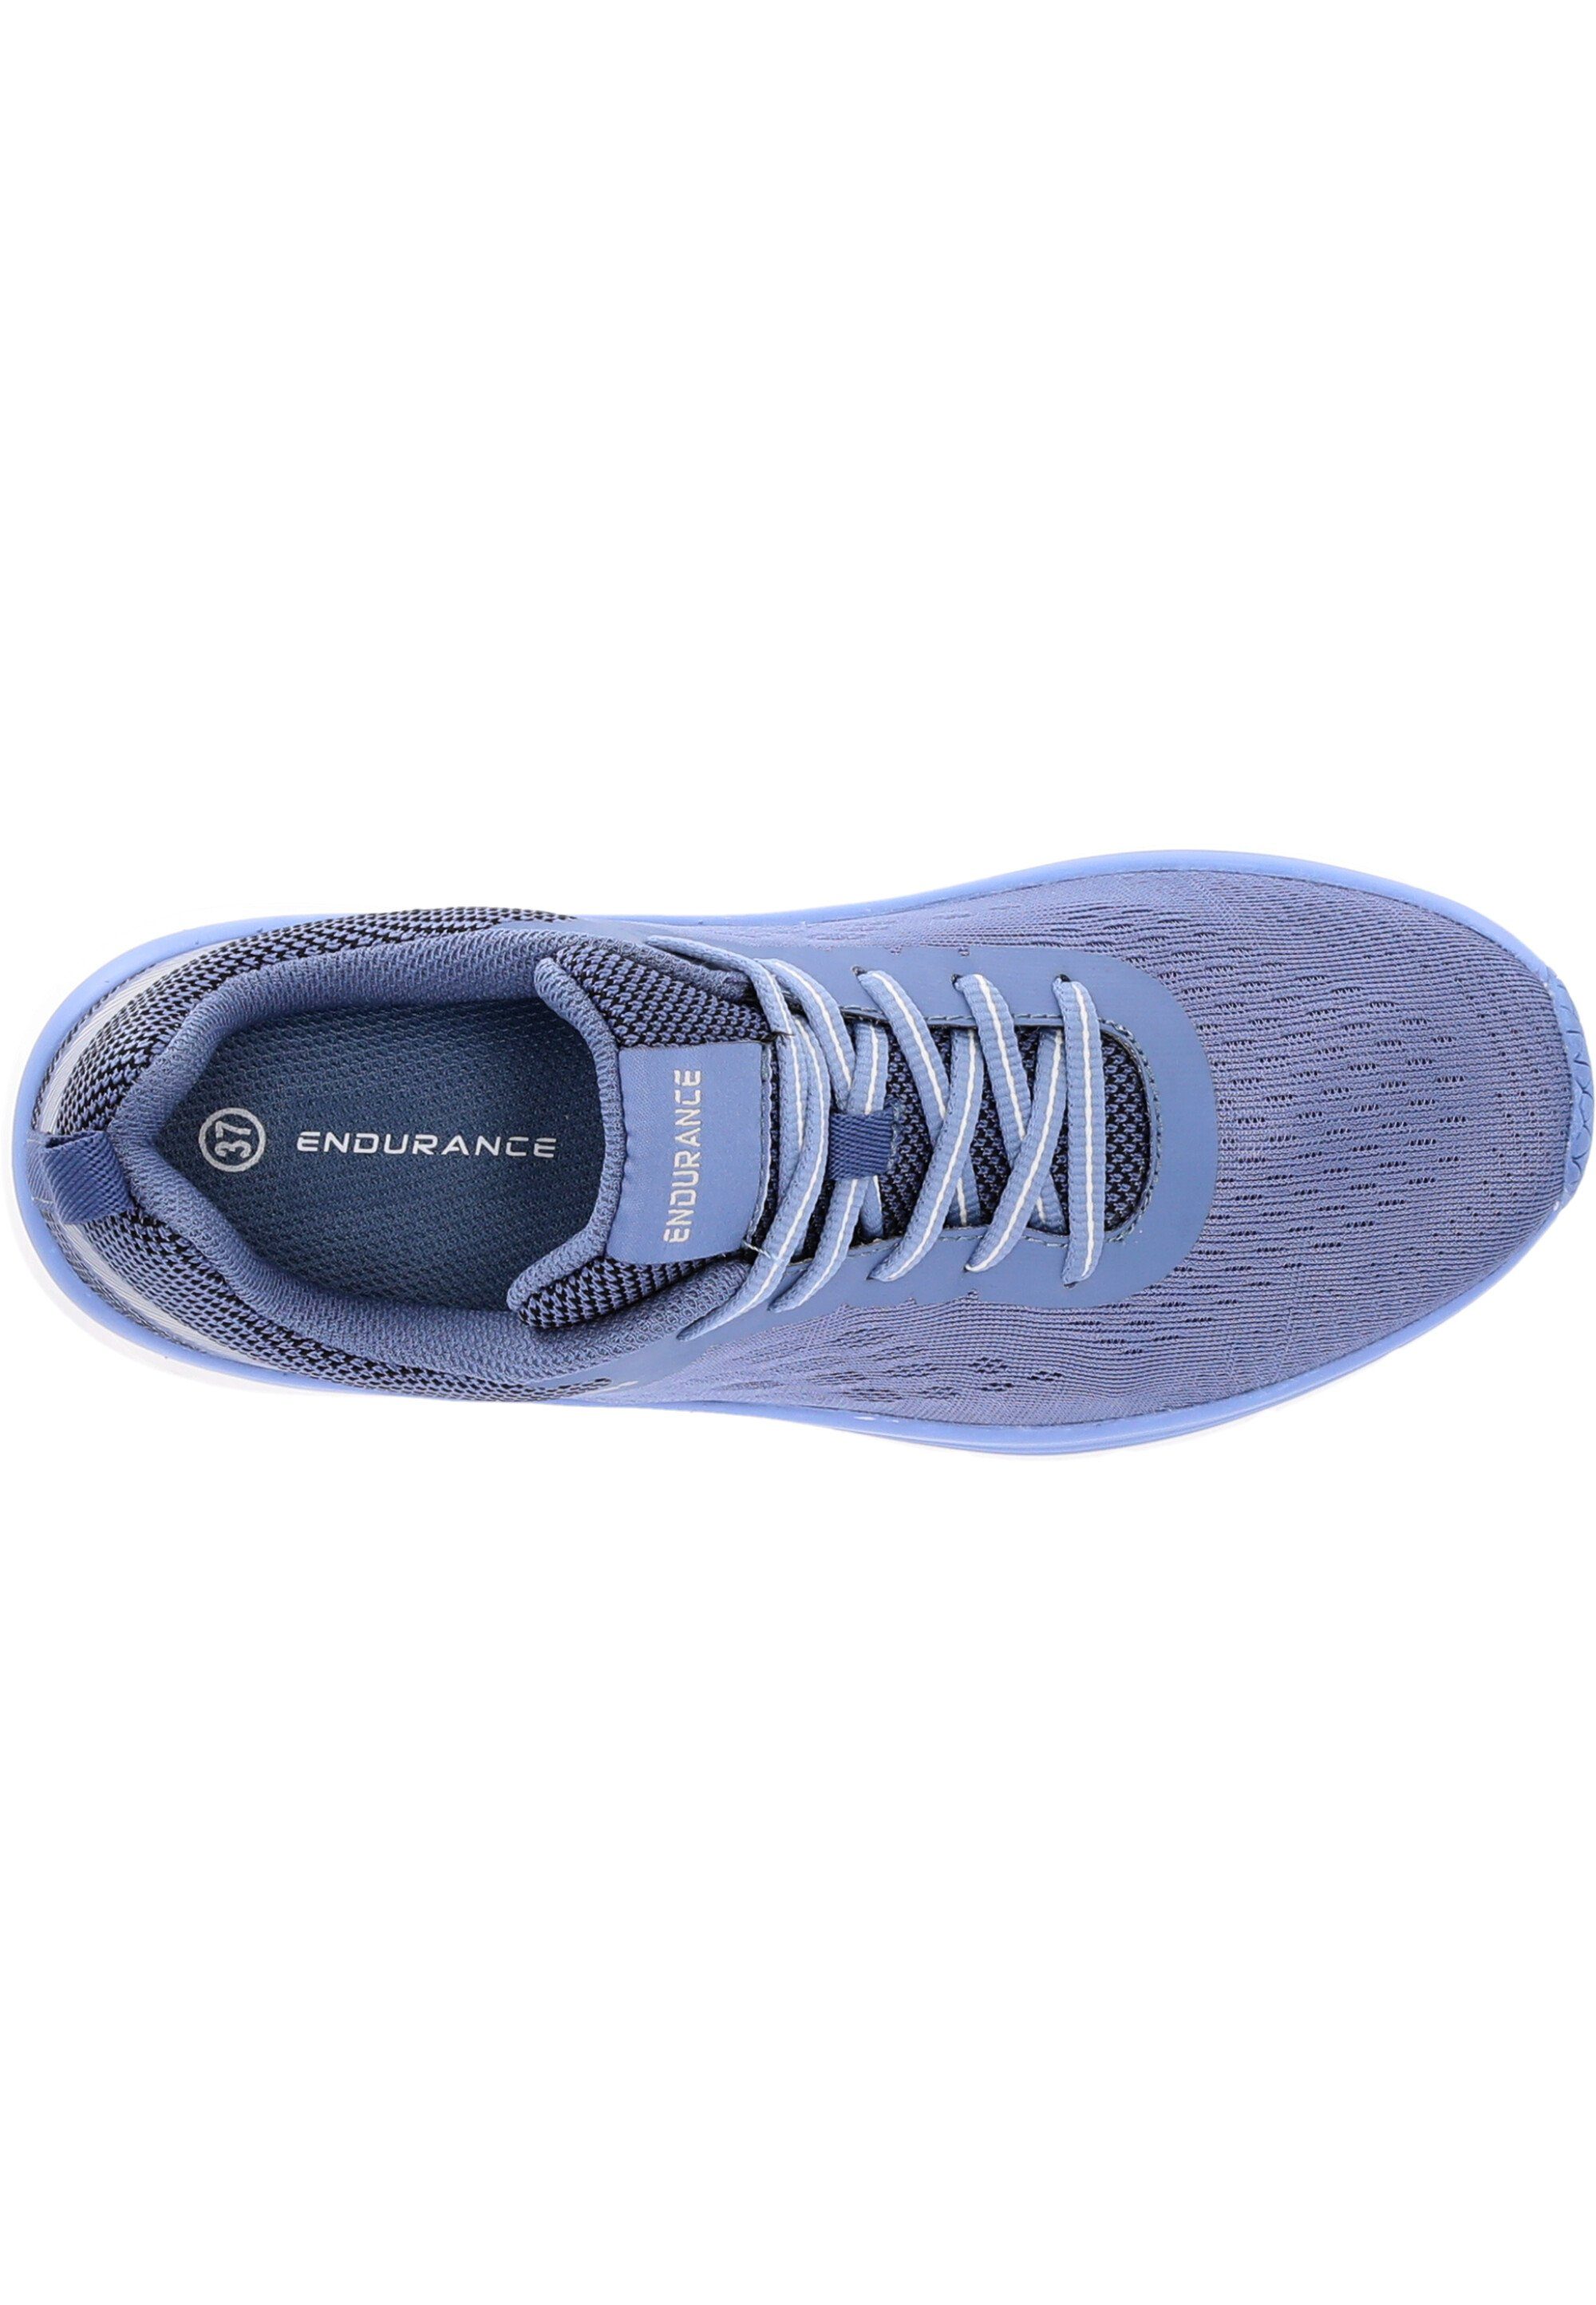 ENDURANCE Fortlian Sneaker mit blau komfortabler Dämpfung